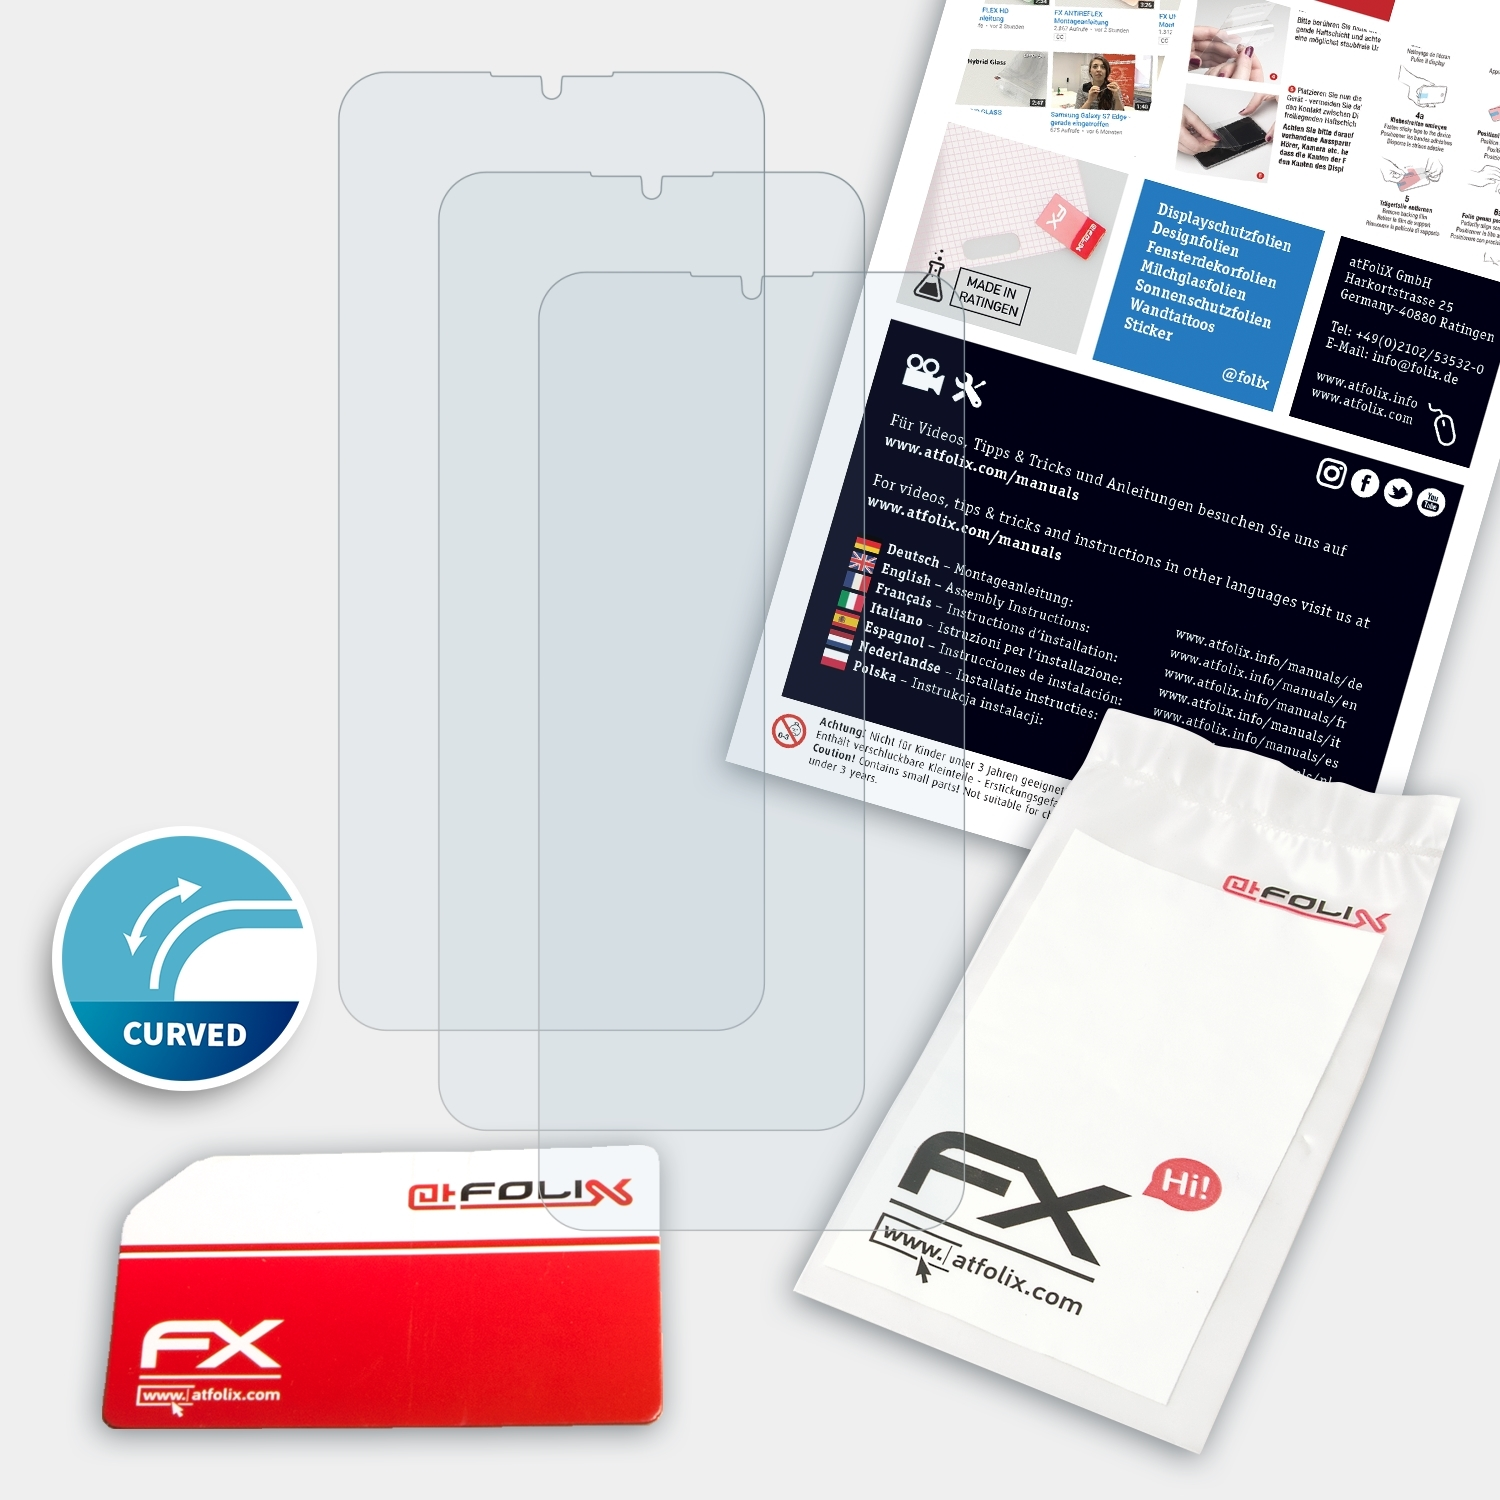 ATFOLIX 3x FX-ActiFleX Displayschutz(für Alcatel (2020)) 3X